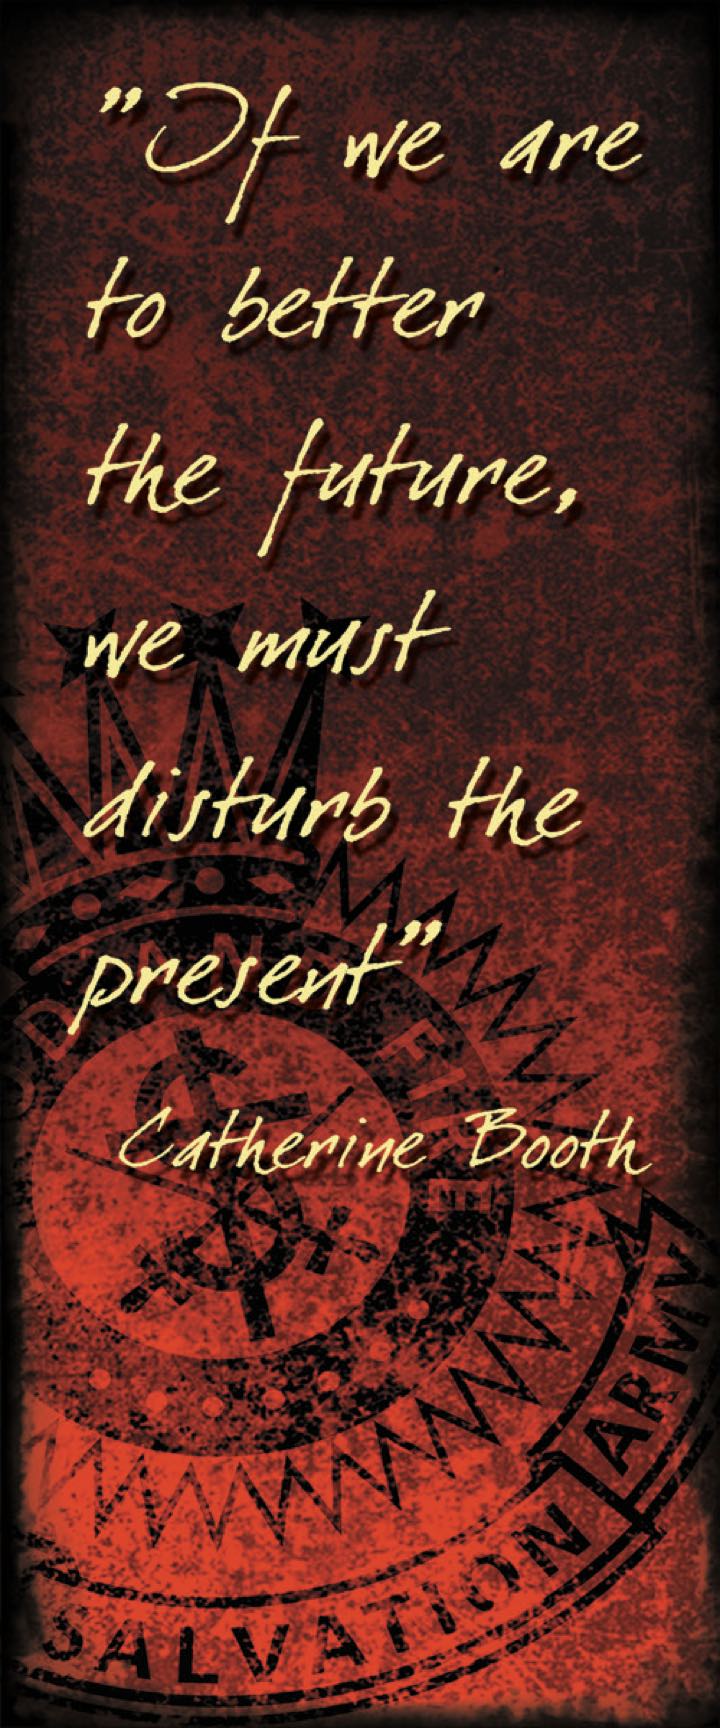 Catherine Quote Poster